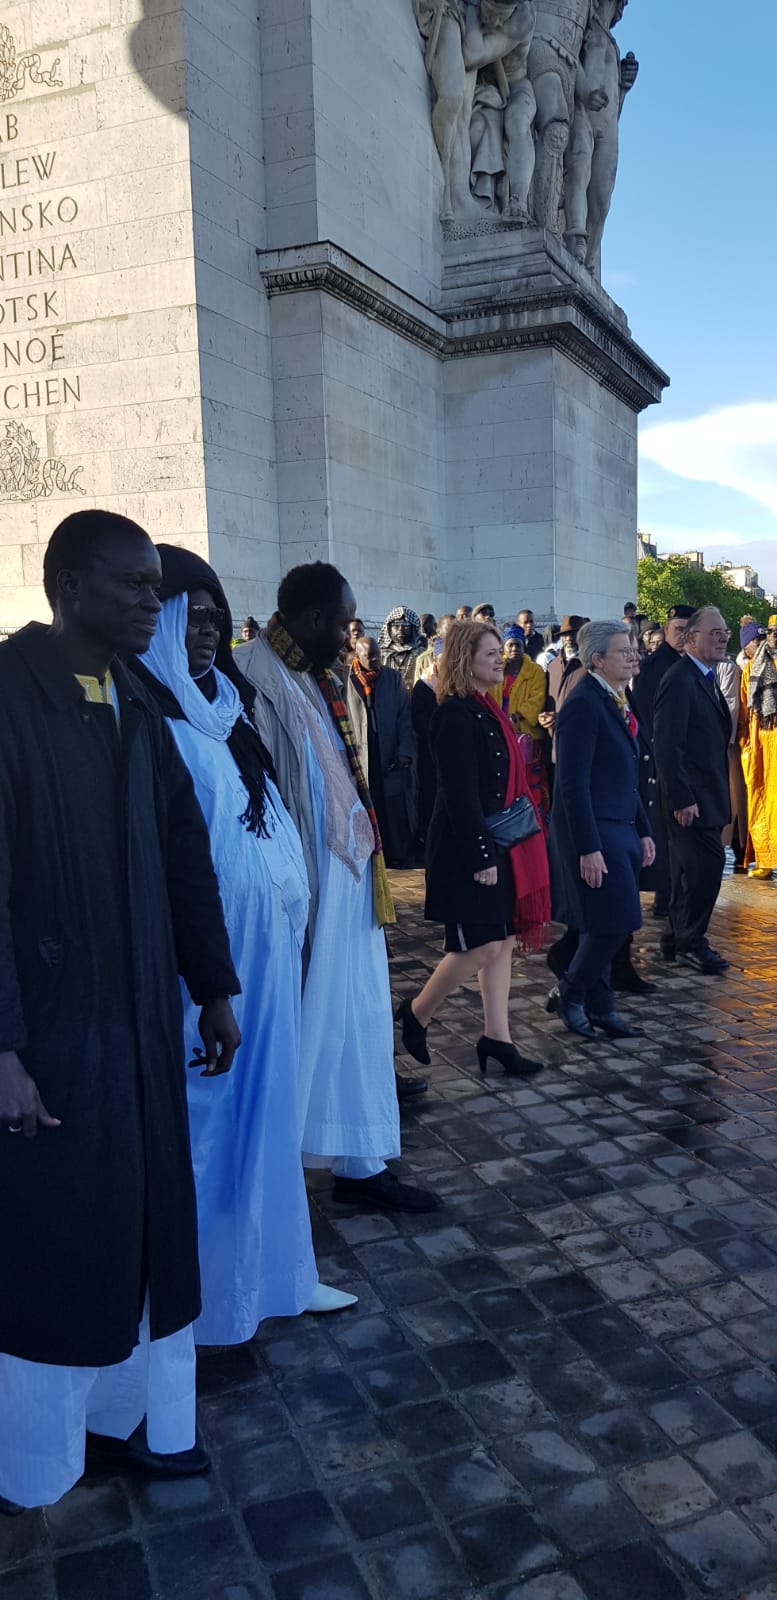 Paris : La communauté mouride rend hommage à Serigne Fallou Fall, fils aîné de Mame Cheikh Ibrahima Fall